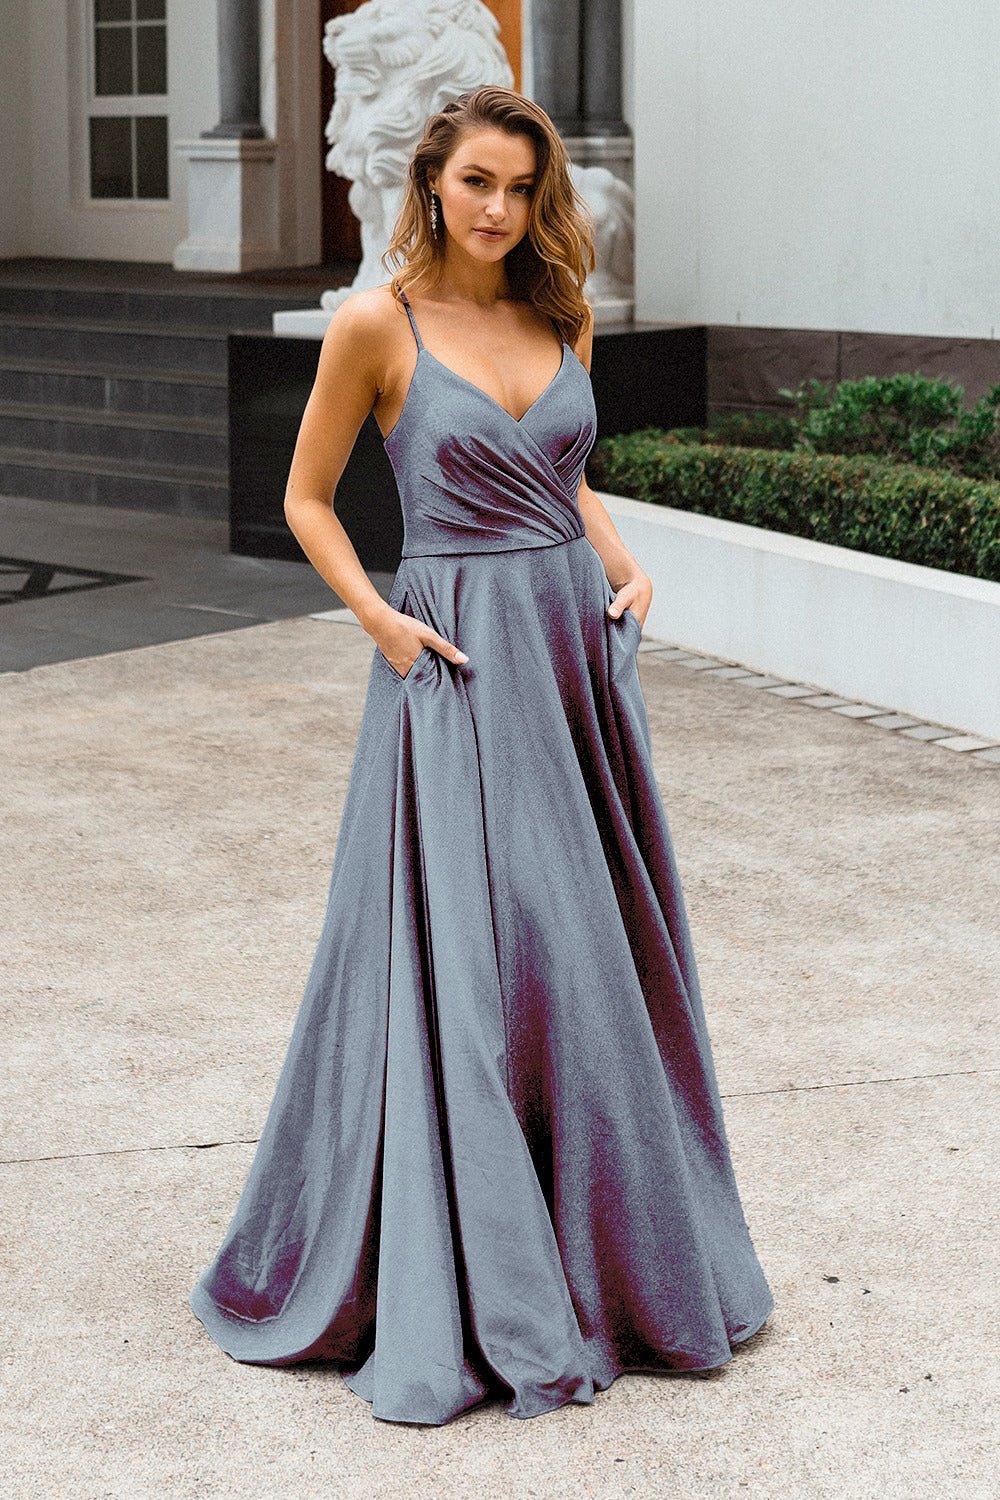 Monroe Dress By Tania Olsen PO891 - ElissaJay Boutique